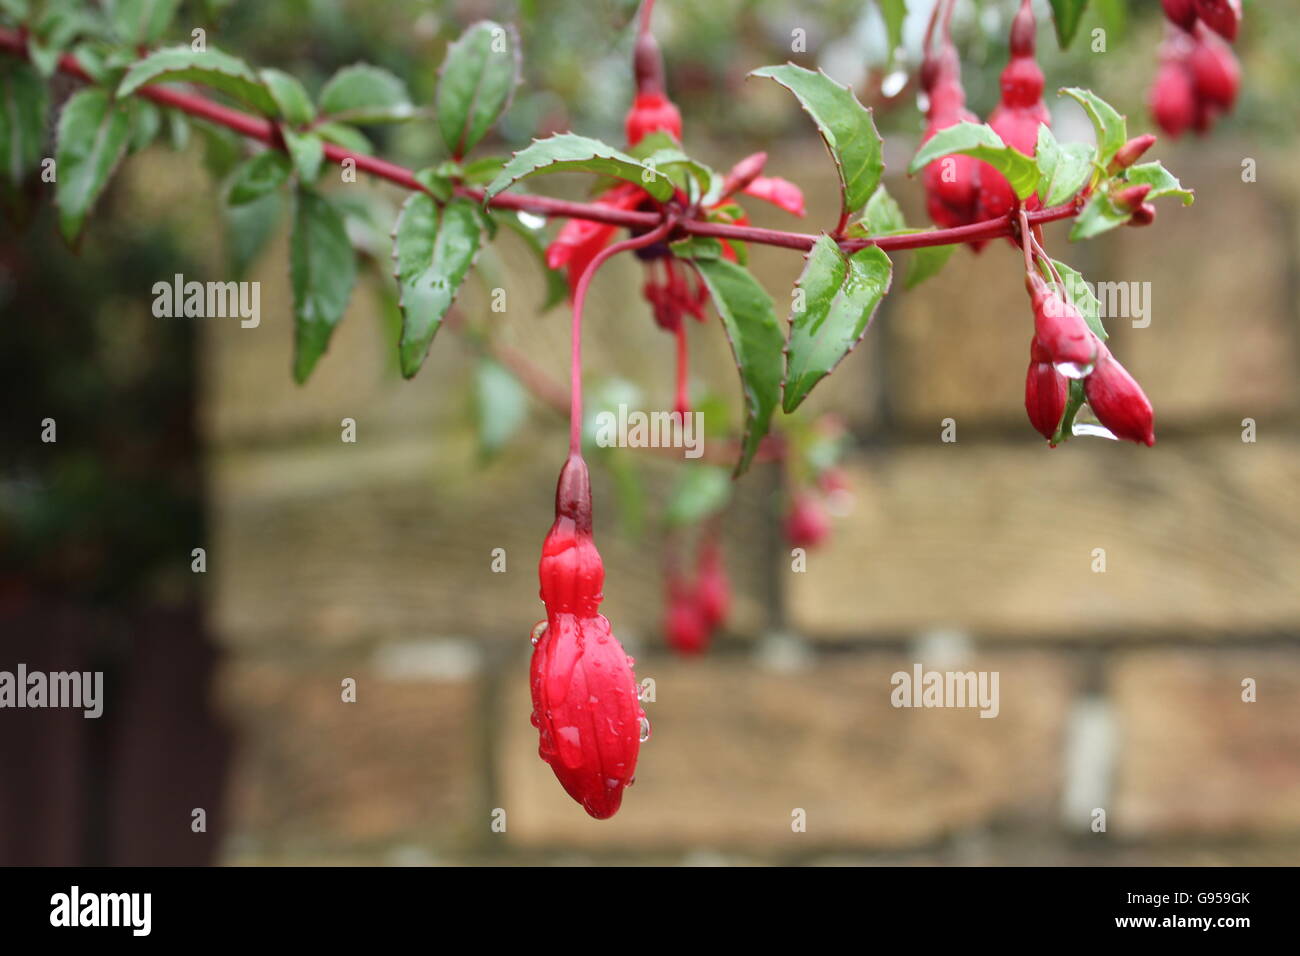 Yemas fucsia rojo cubierto de gotas de lluvia. Foto de stock